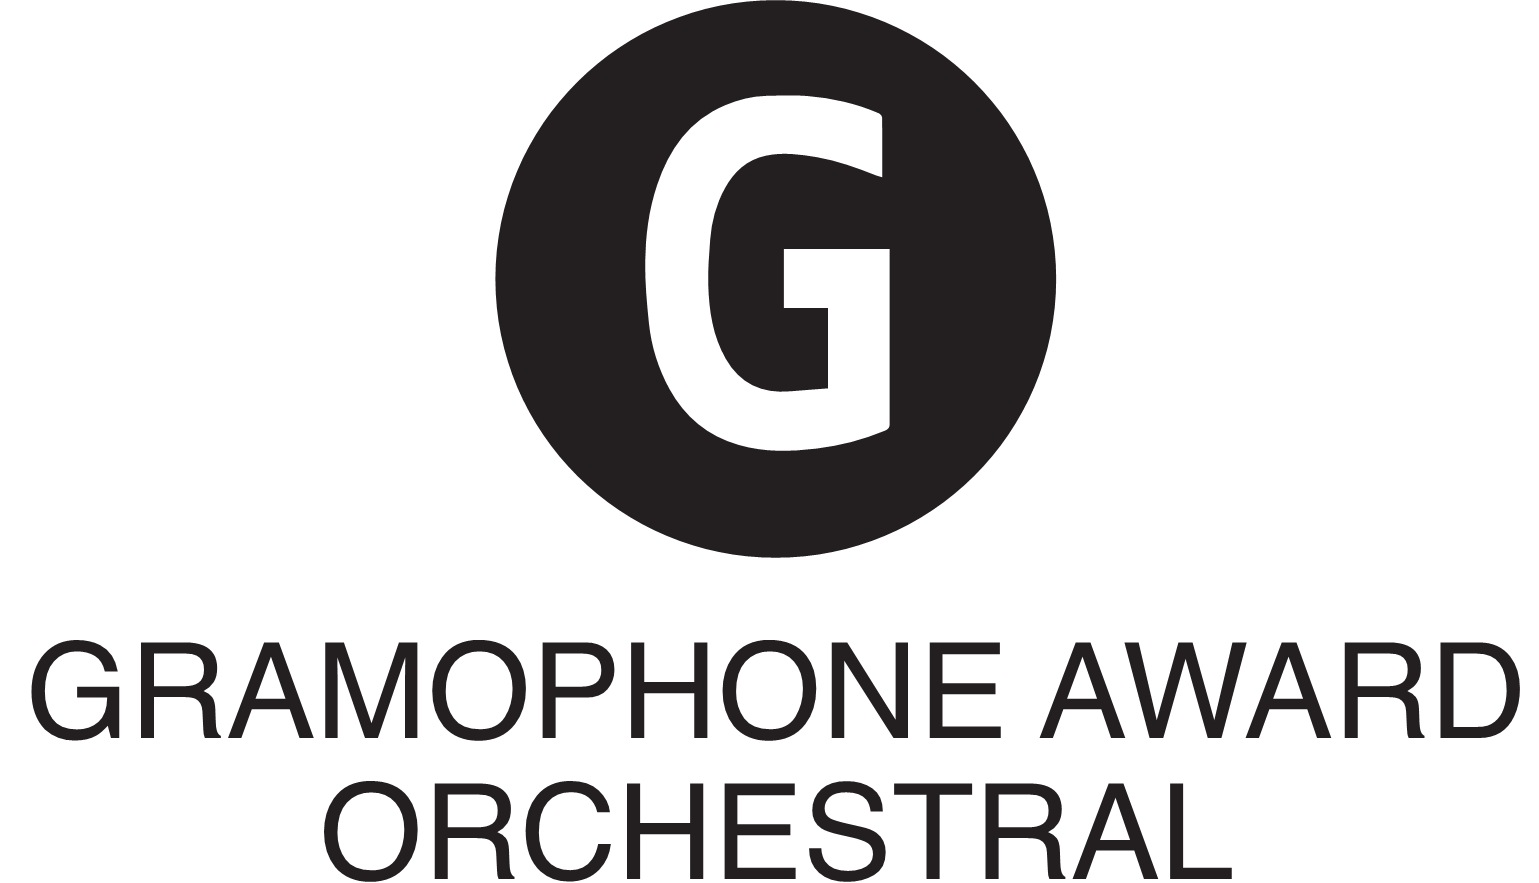 Gramophone Award: 'Orchestral' (2022)